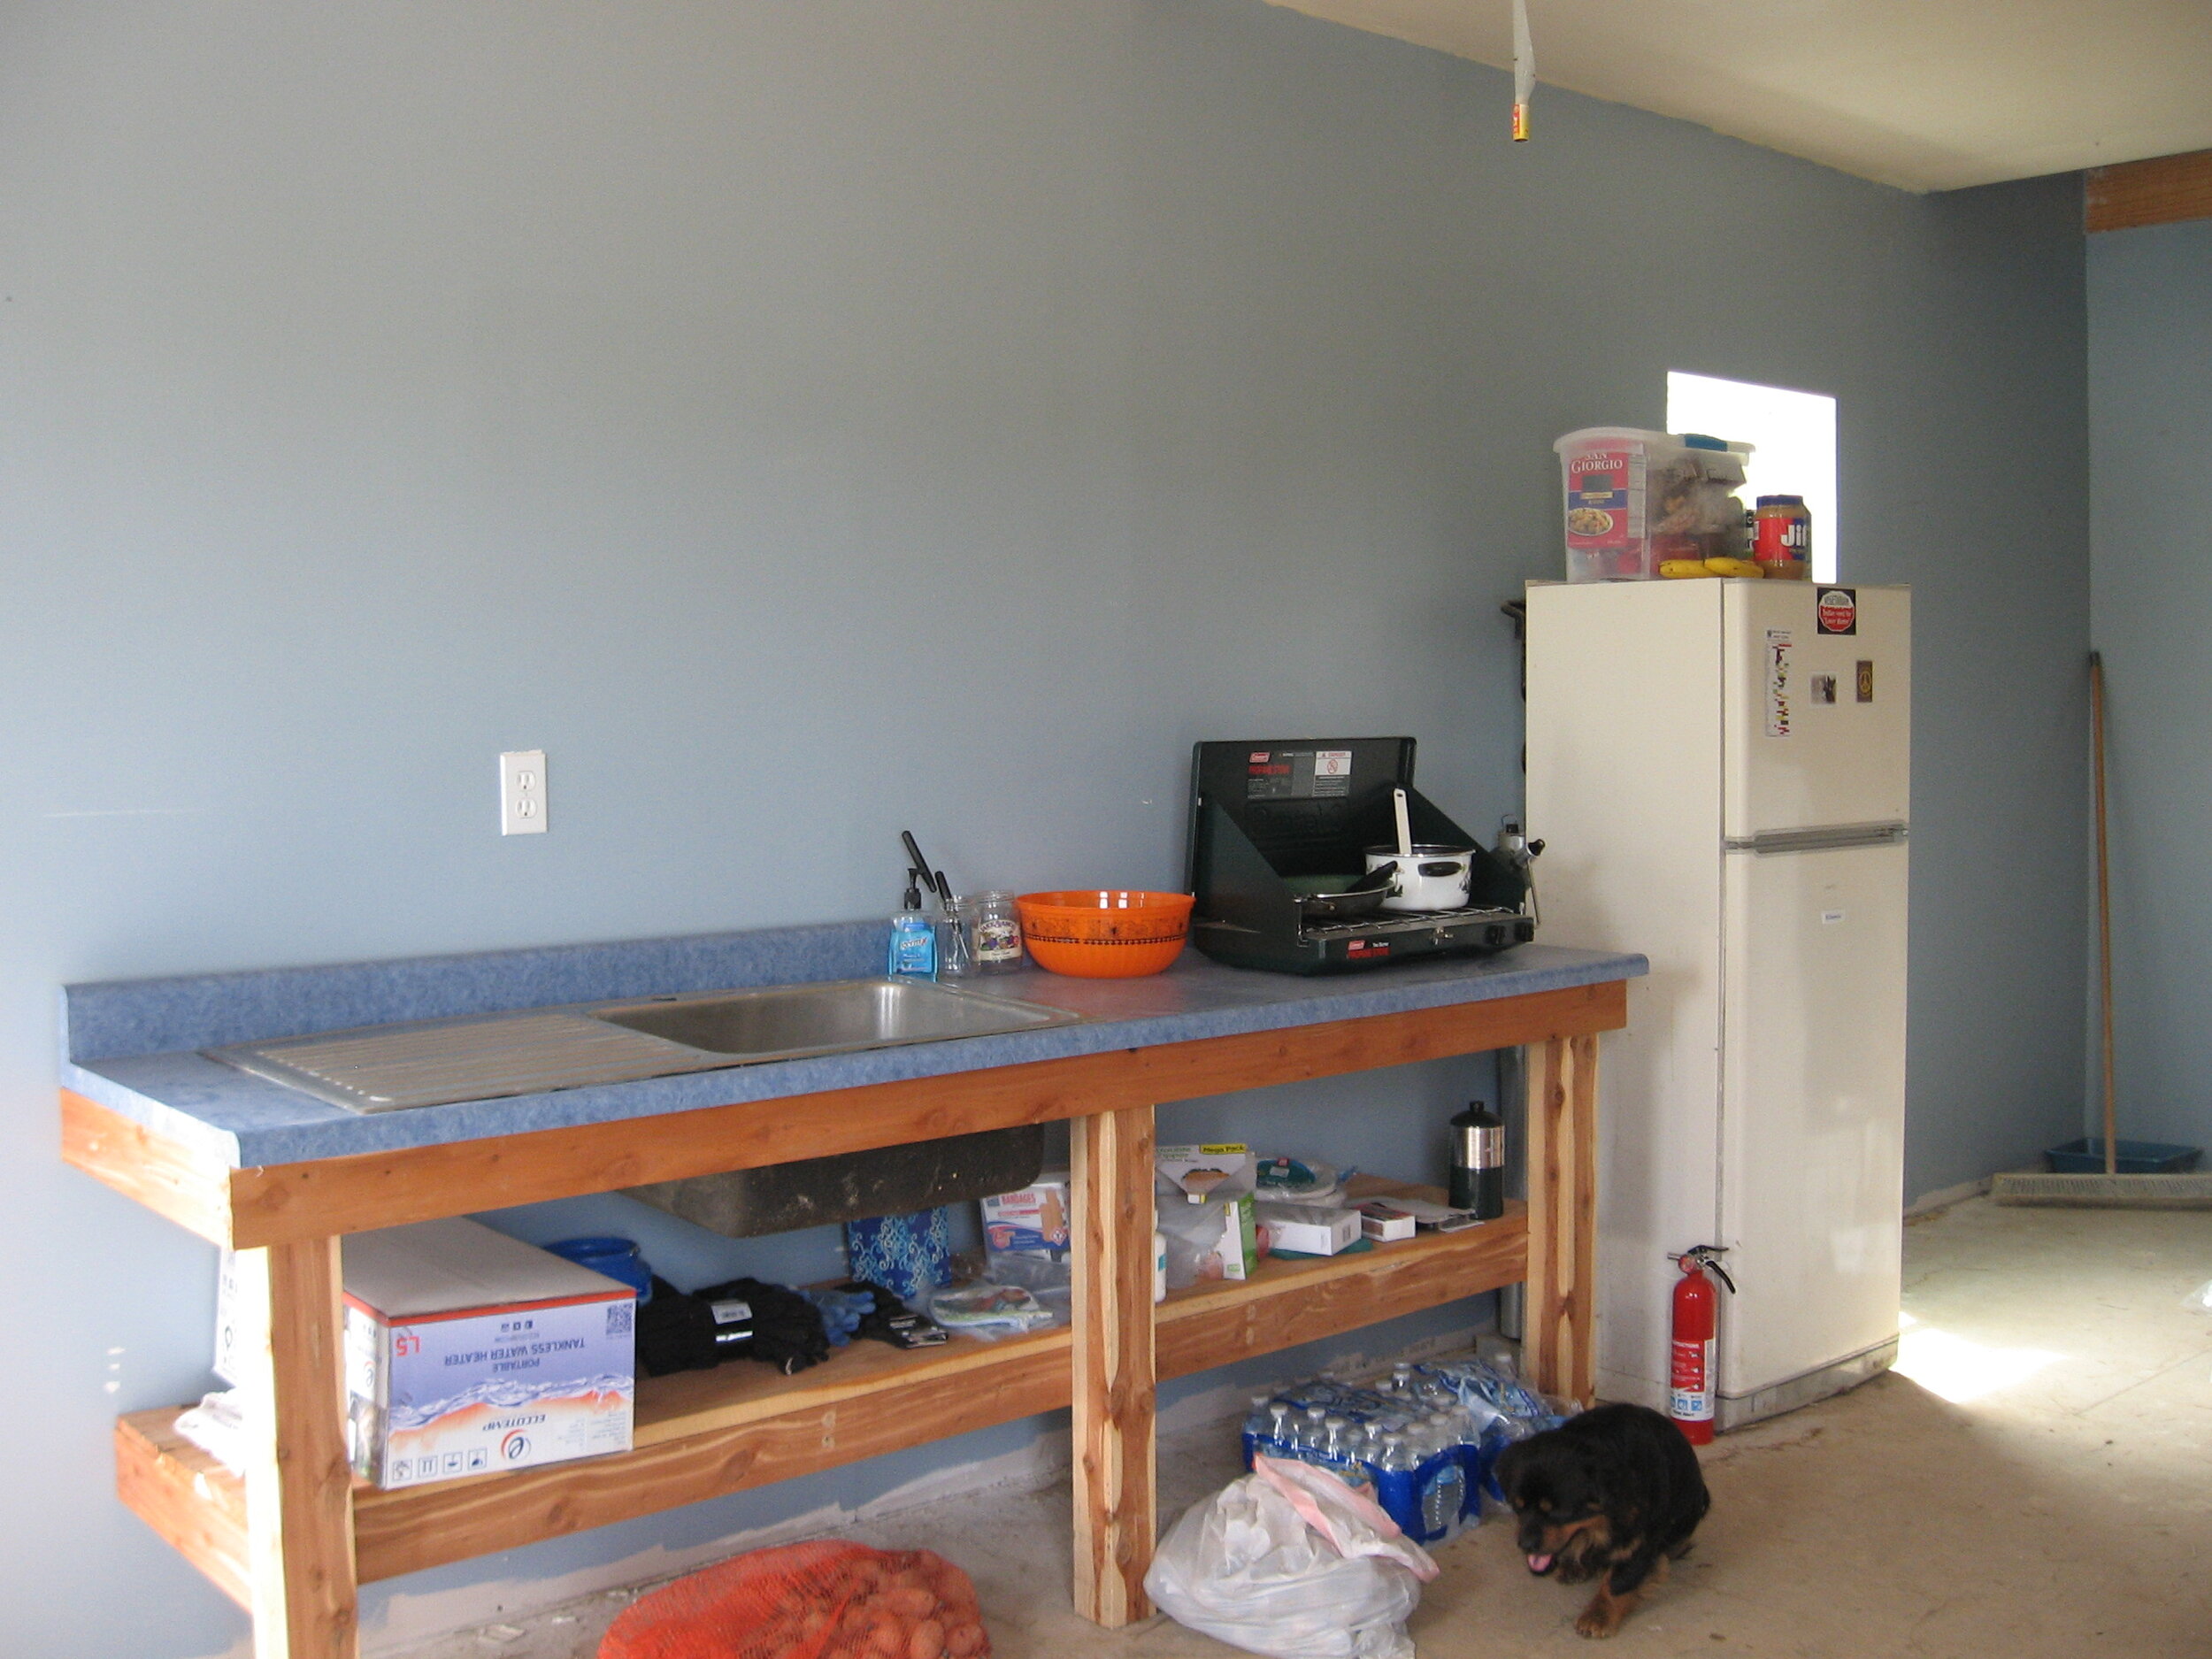 Workroom kitchen in my barn. Dometic propane fridge on right.